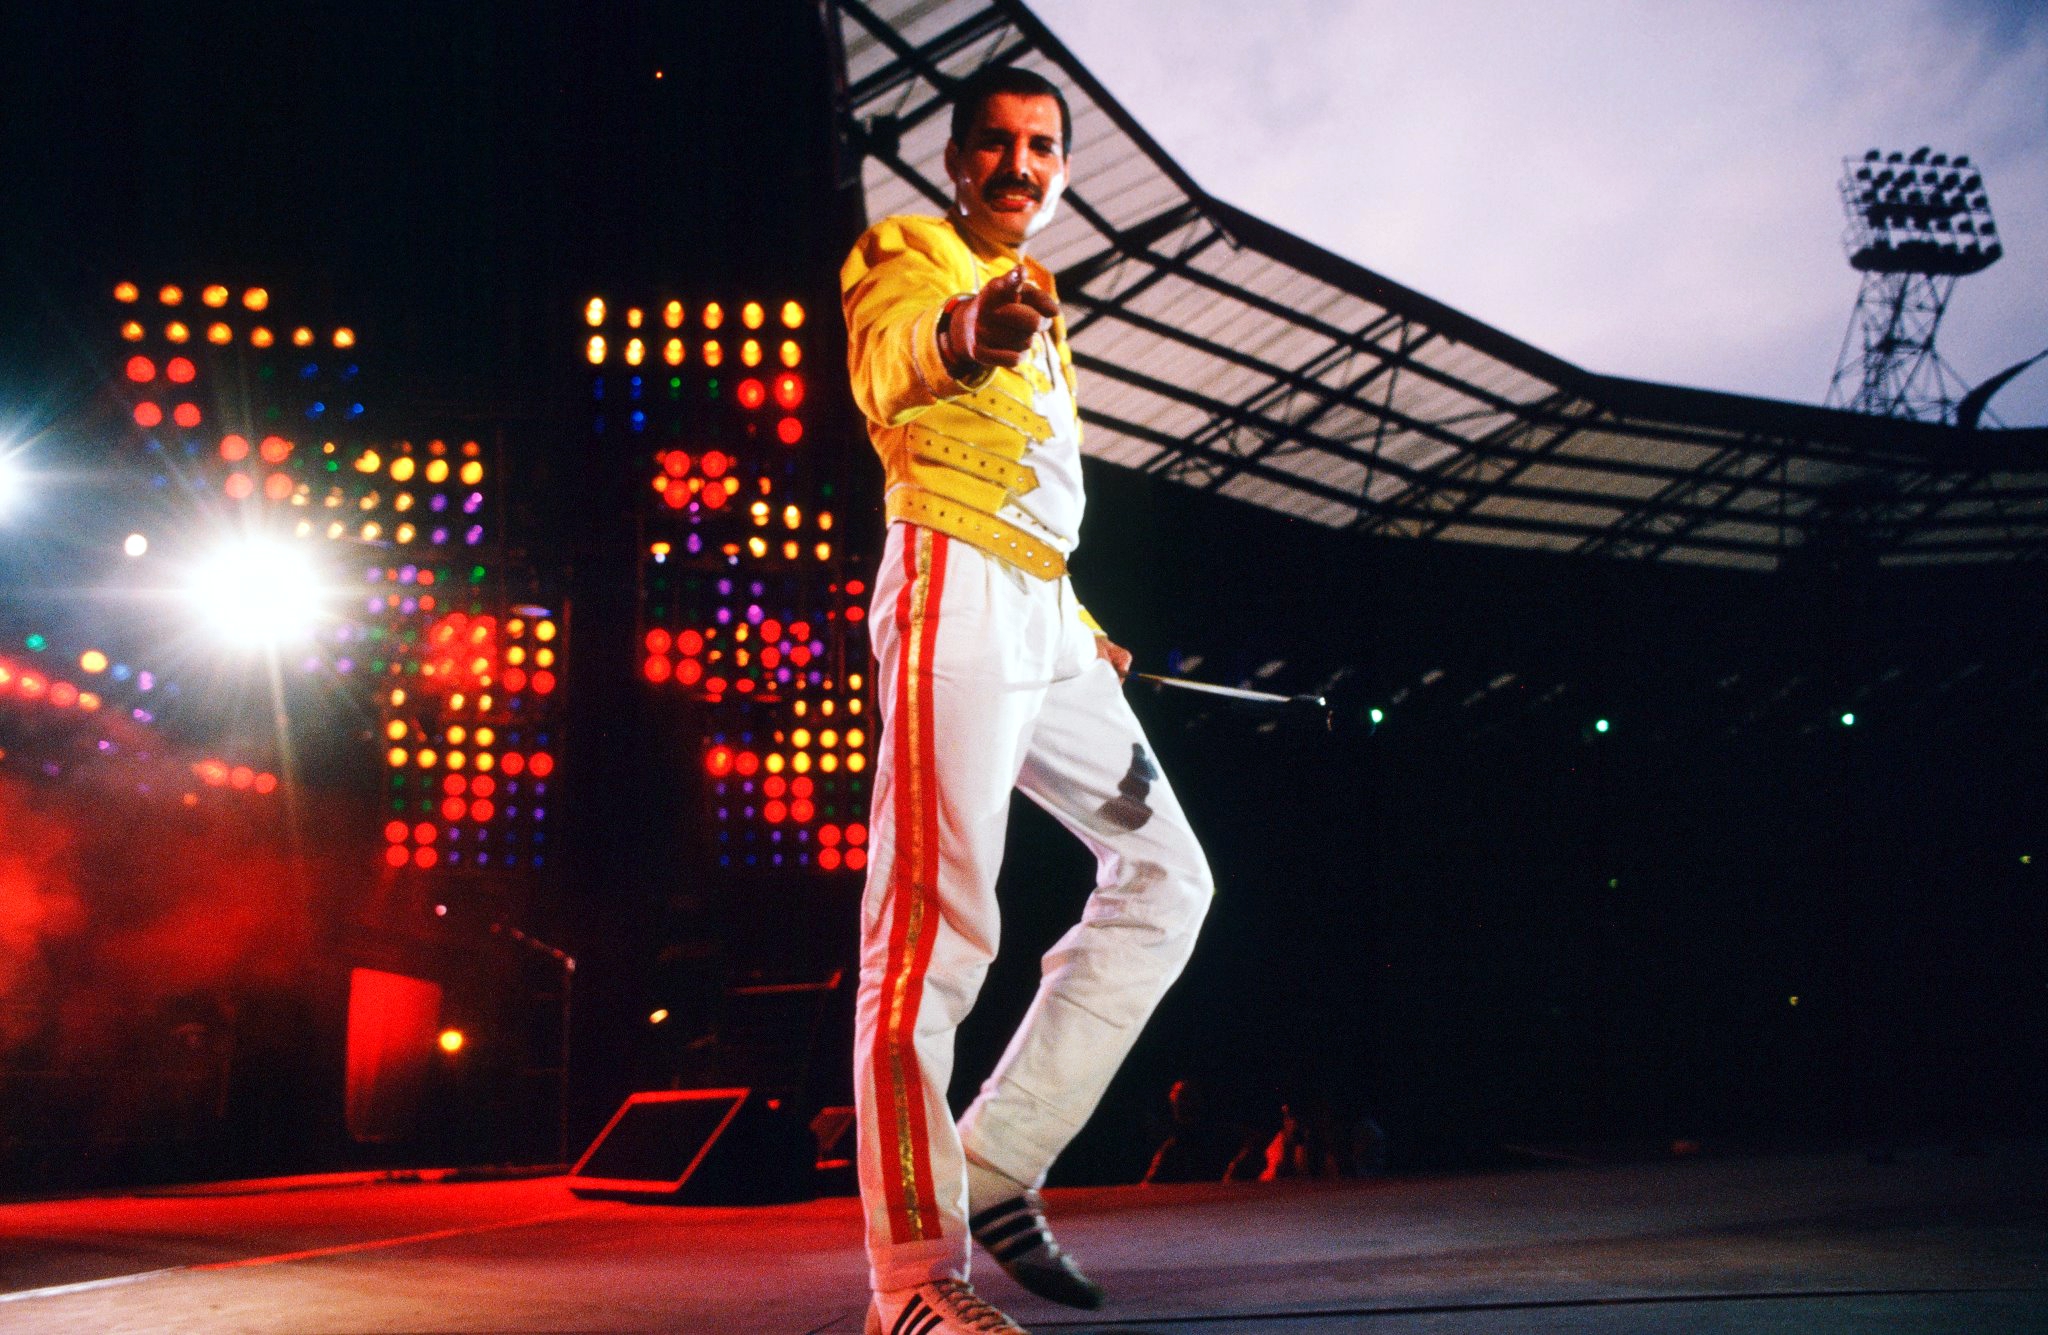 Фредди меркьюри стадион. Freddie Mercury. Фредди Меркьюри Уэмбли. Queen Уэмбли 1986. Группа Квин Фредди Меркьюри.